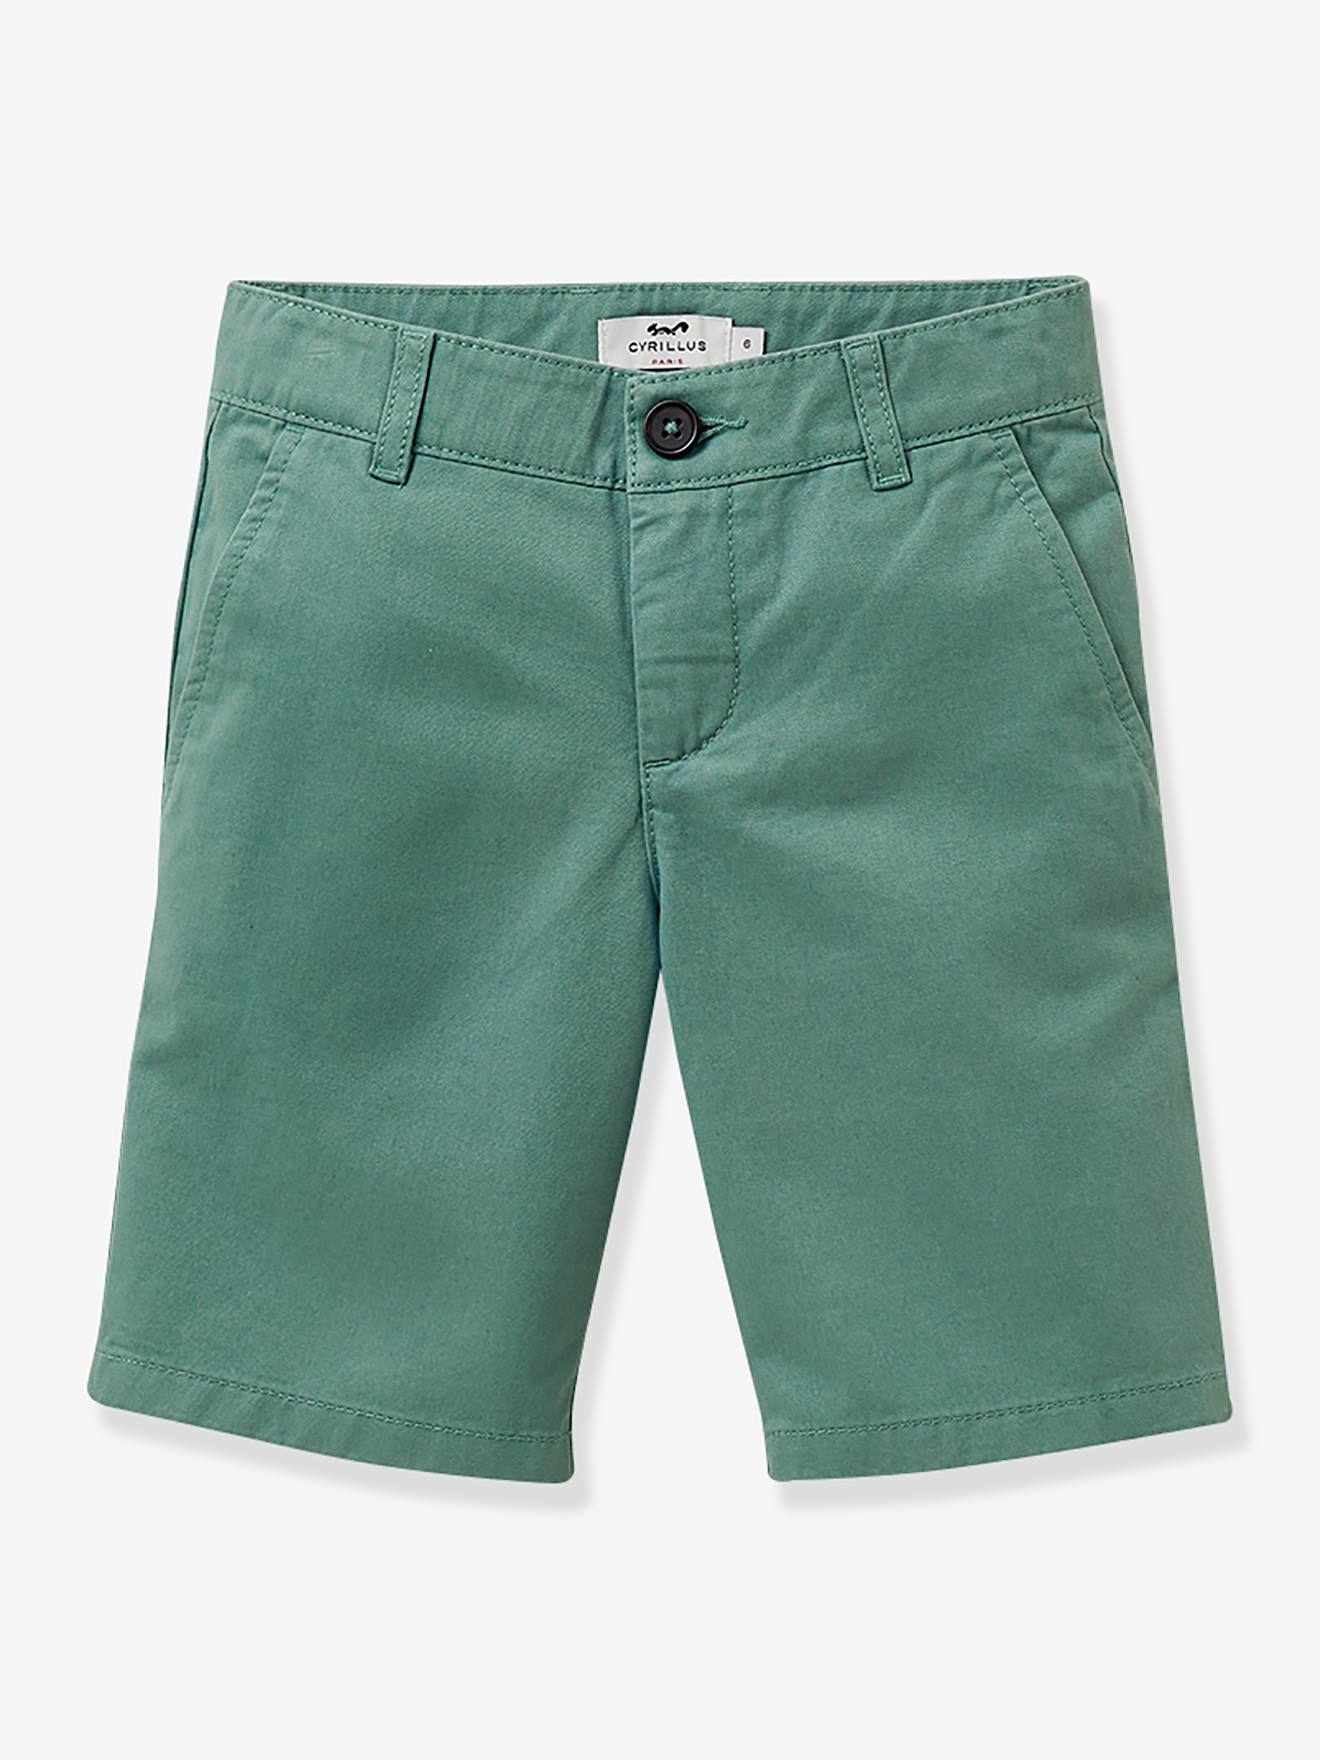 Chino Bermuda Shorts for Boys by CYRILLUS aqua green